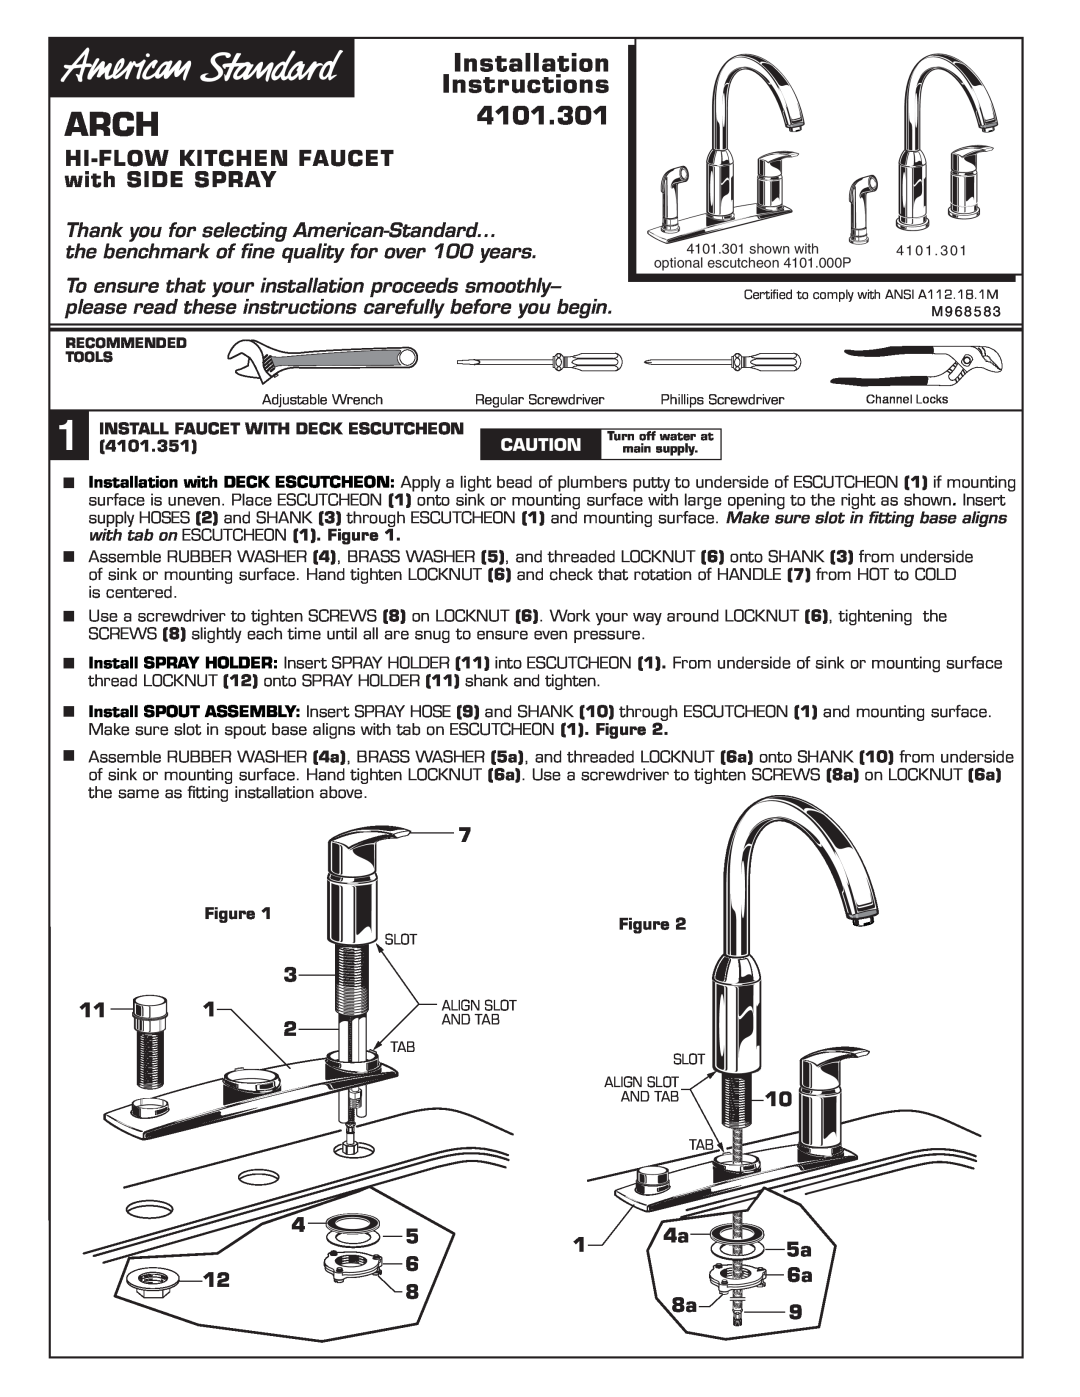 American Standard 4101.301 installation instructions Arch, Installation, Instructions, Hi-Flowkitchen Faucet 